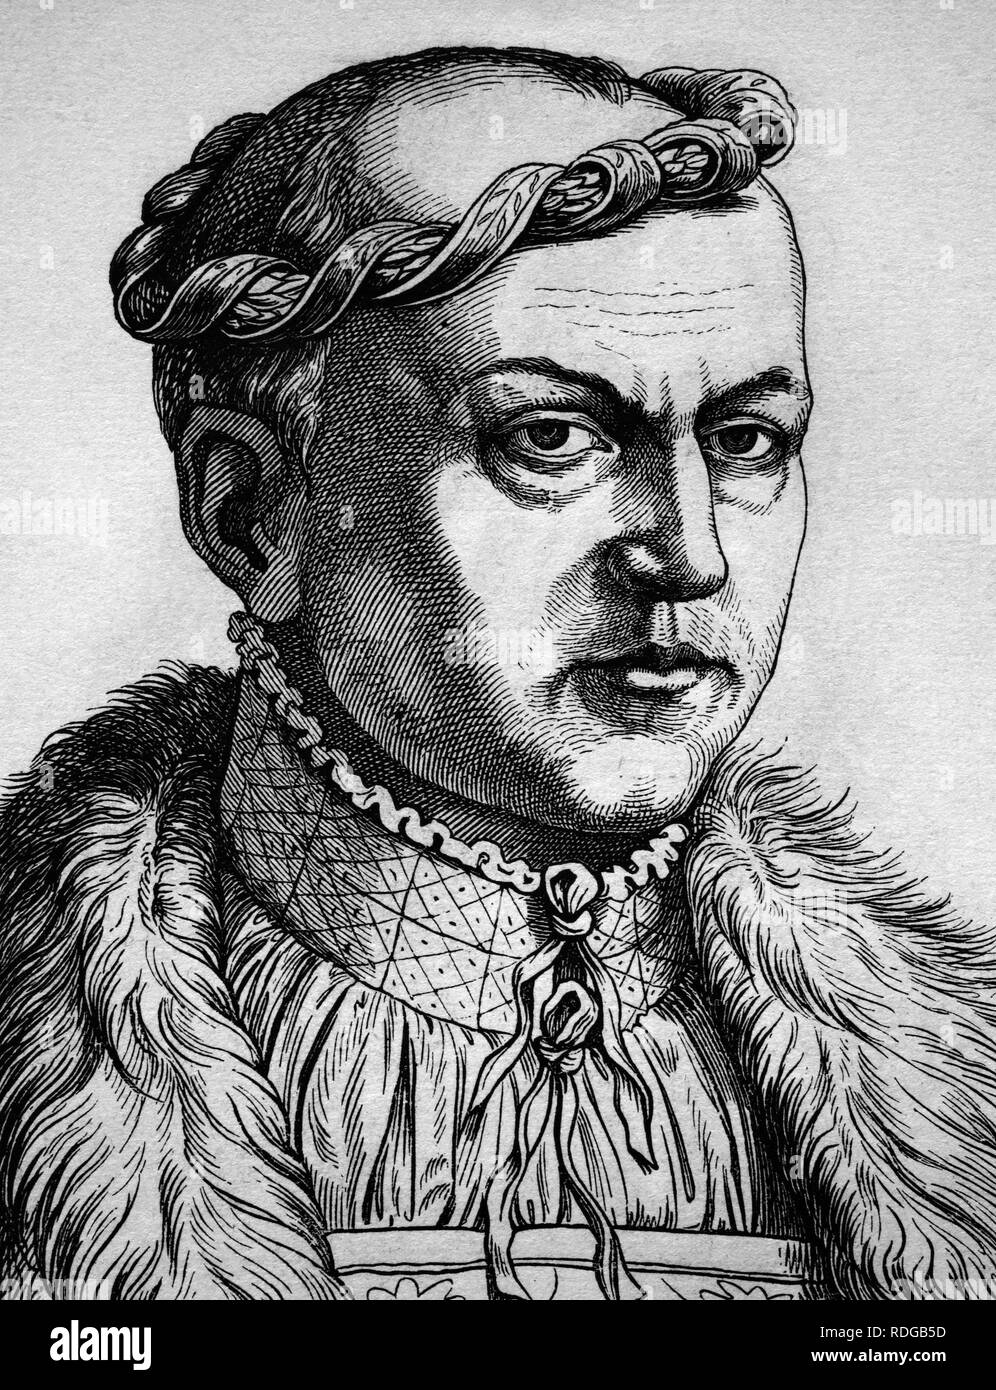 Georg, Duke of Saxony, 1471 - 1539, portrait, historical illustration, 1880  Stock Photo - Alamy